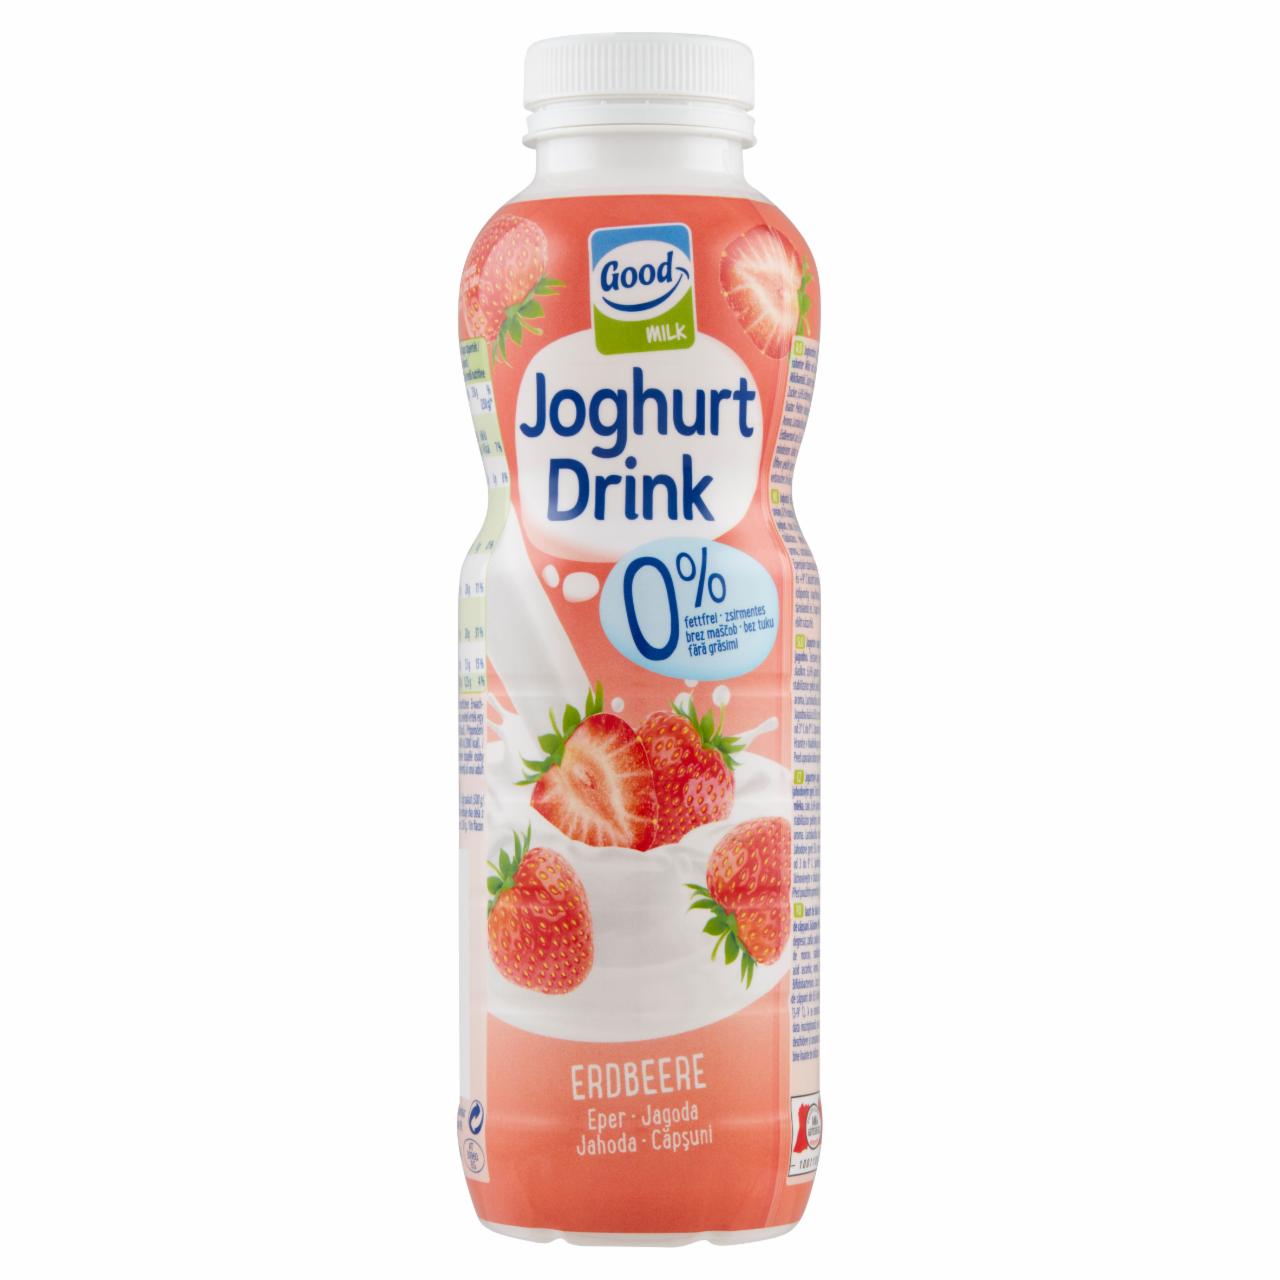 Photo - Good Milk Low-Fat Strawberry Yoghurt Drink 500 g